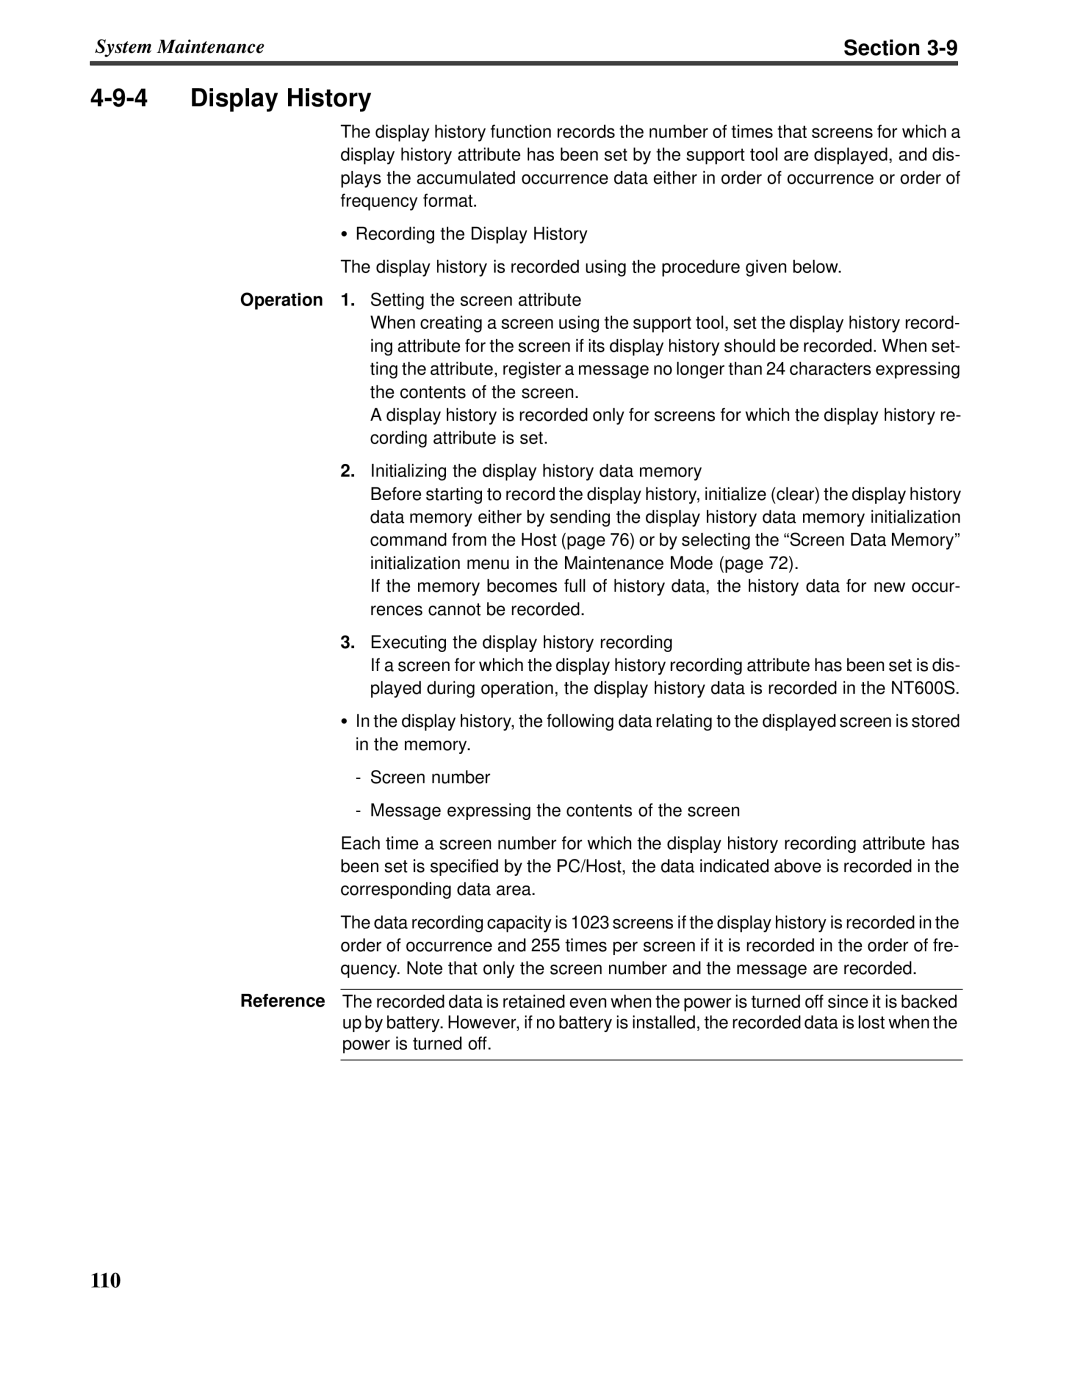 Omron V022-E3-1 operation manual 4-9-4Display History, Section 